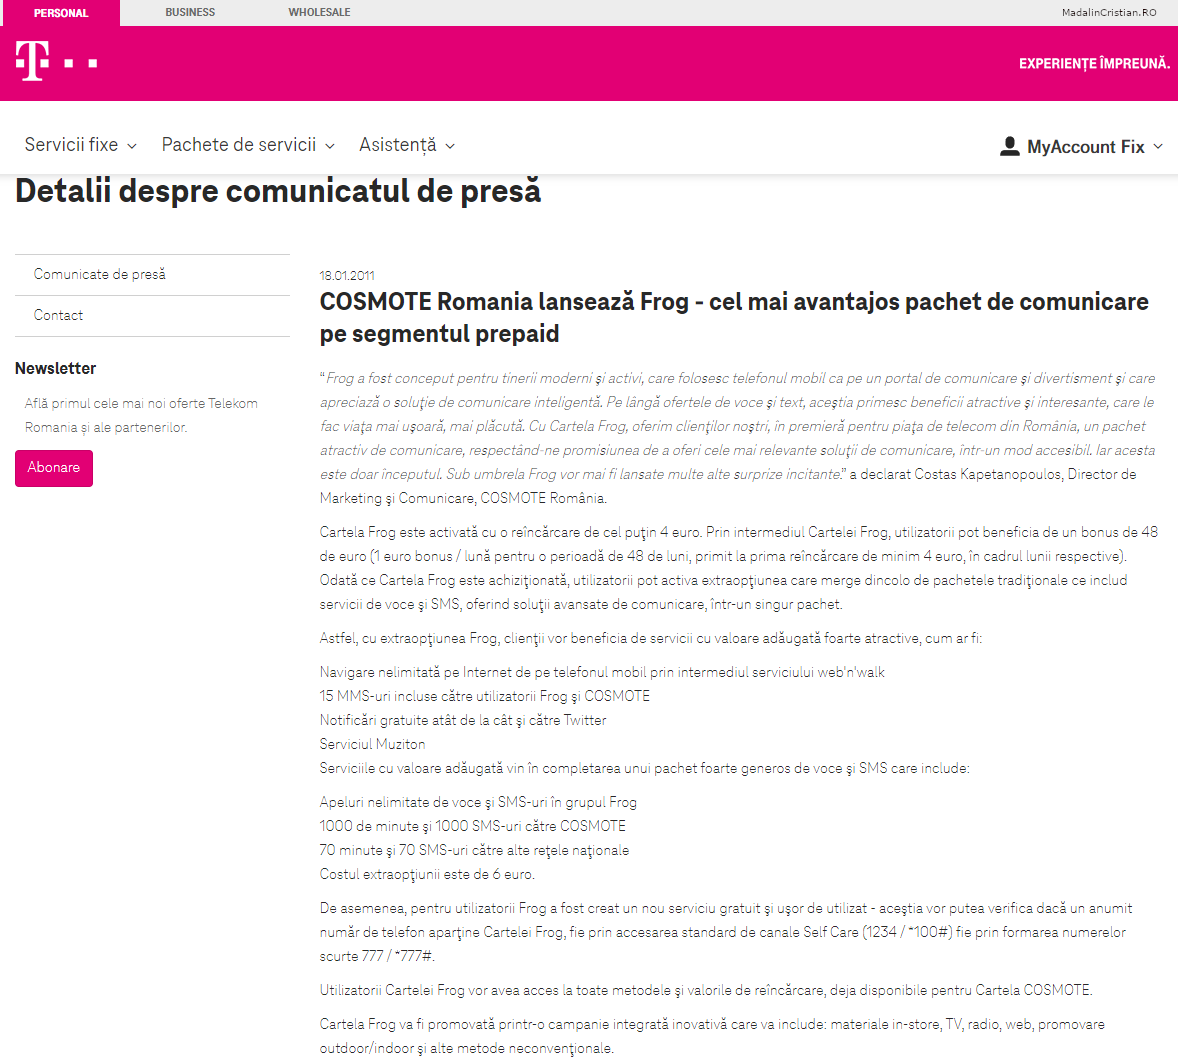 Comunicat de presa Telekom 18.01.2011 COSMOTE Romania lanseaza Frog cel mai avantajos pachet de comunicare pe segmentul prepaid